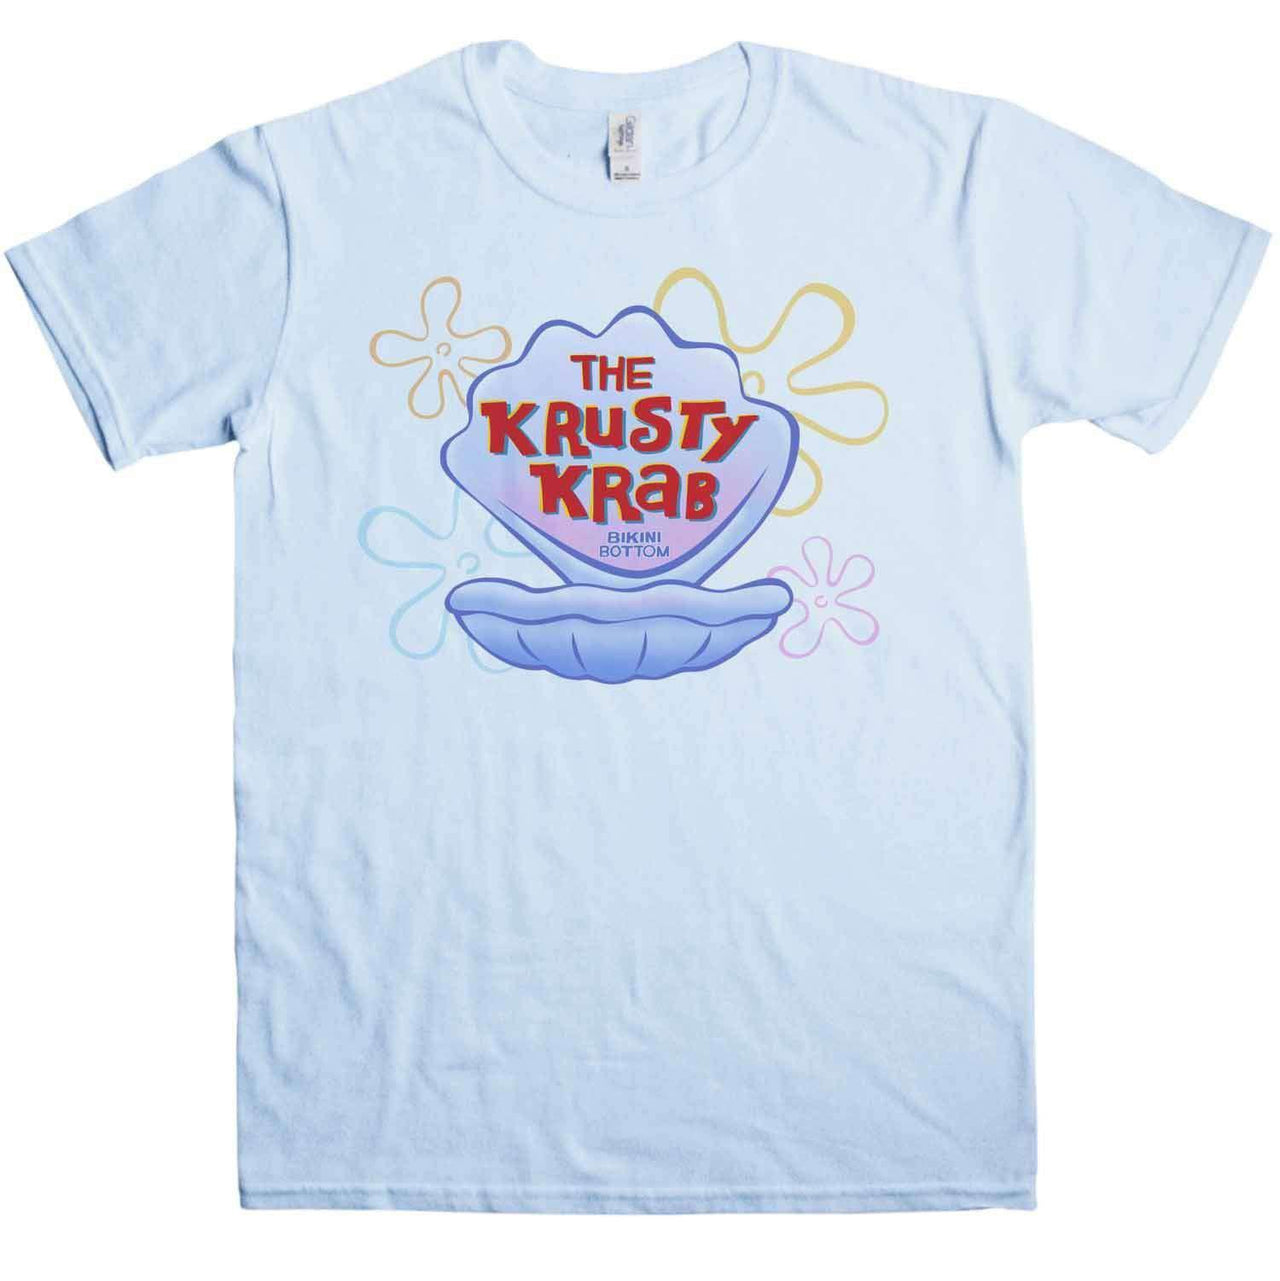 Krusty Krab T-Shirt For Men 8Ball